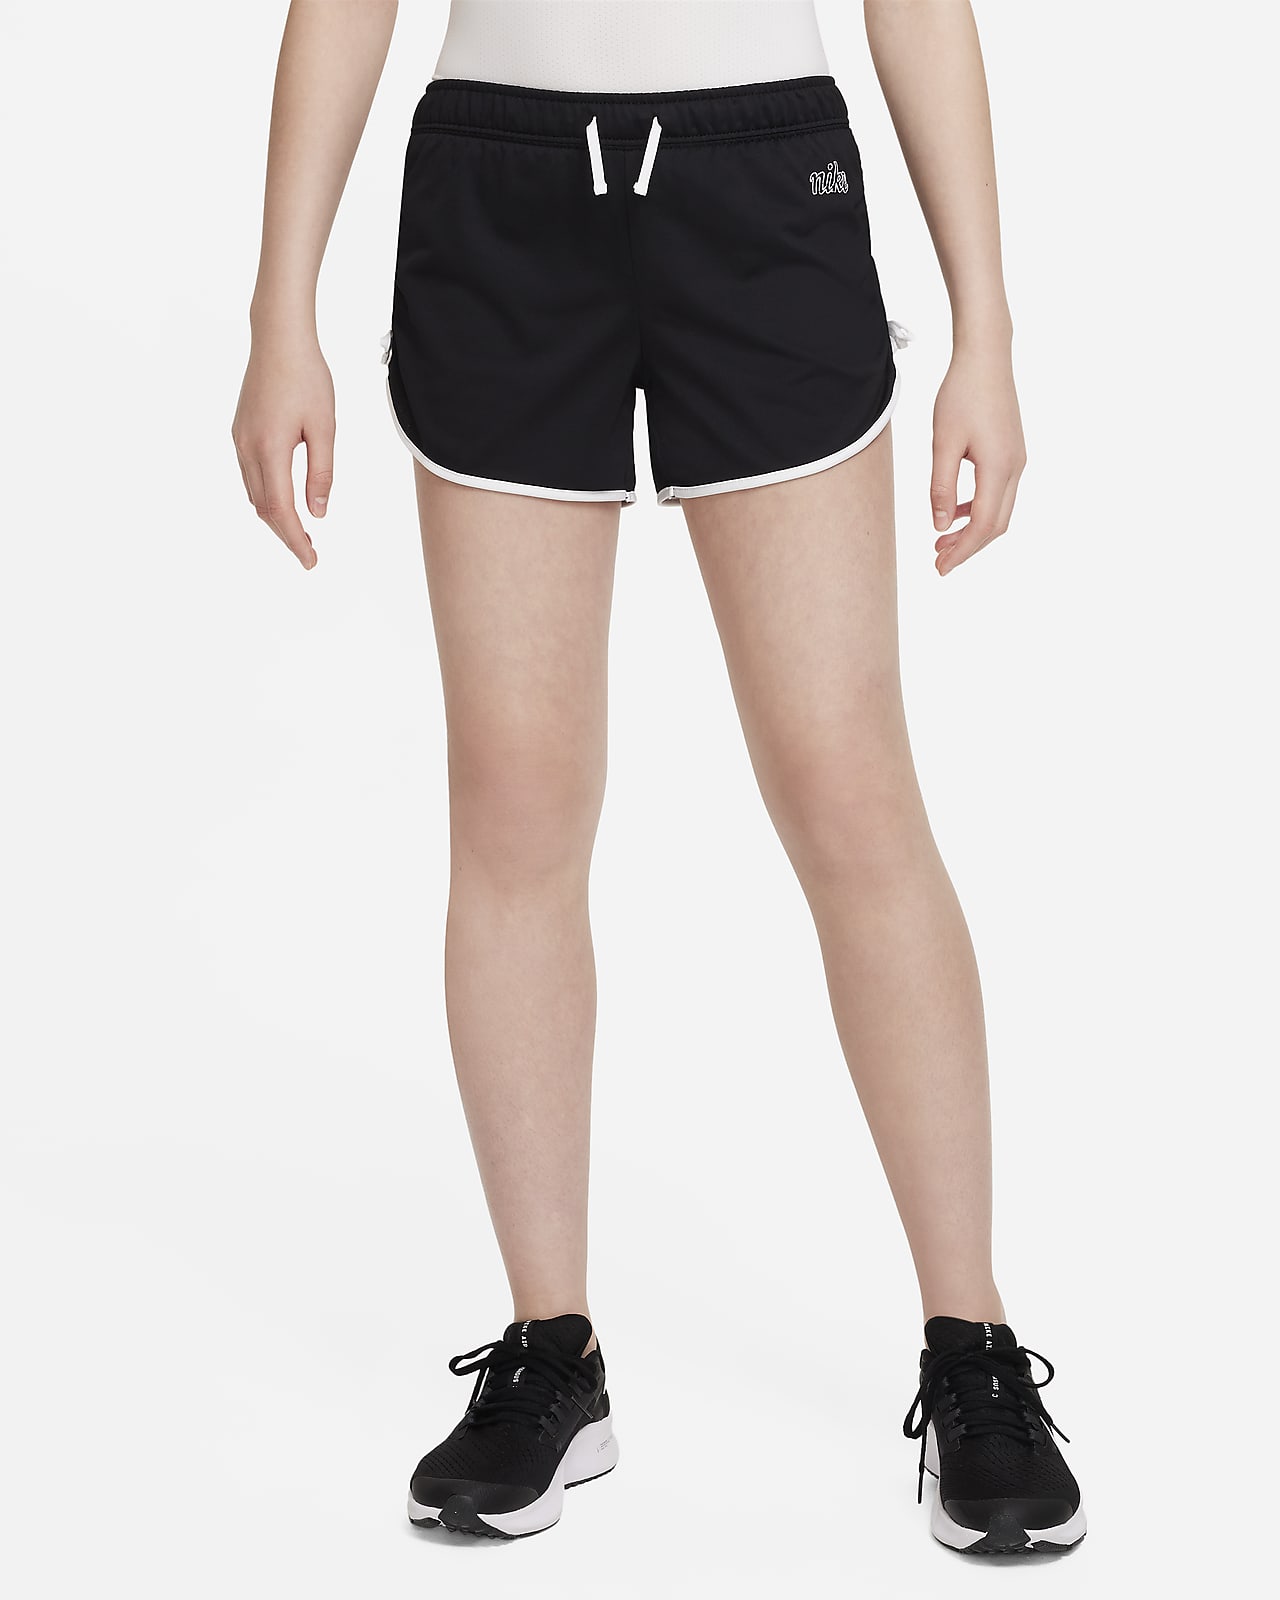 45 Best Girls Nike shorts ideas  nike shorts, nike tempo shorts, nike tempo